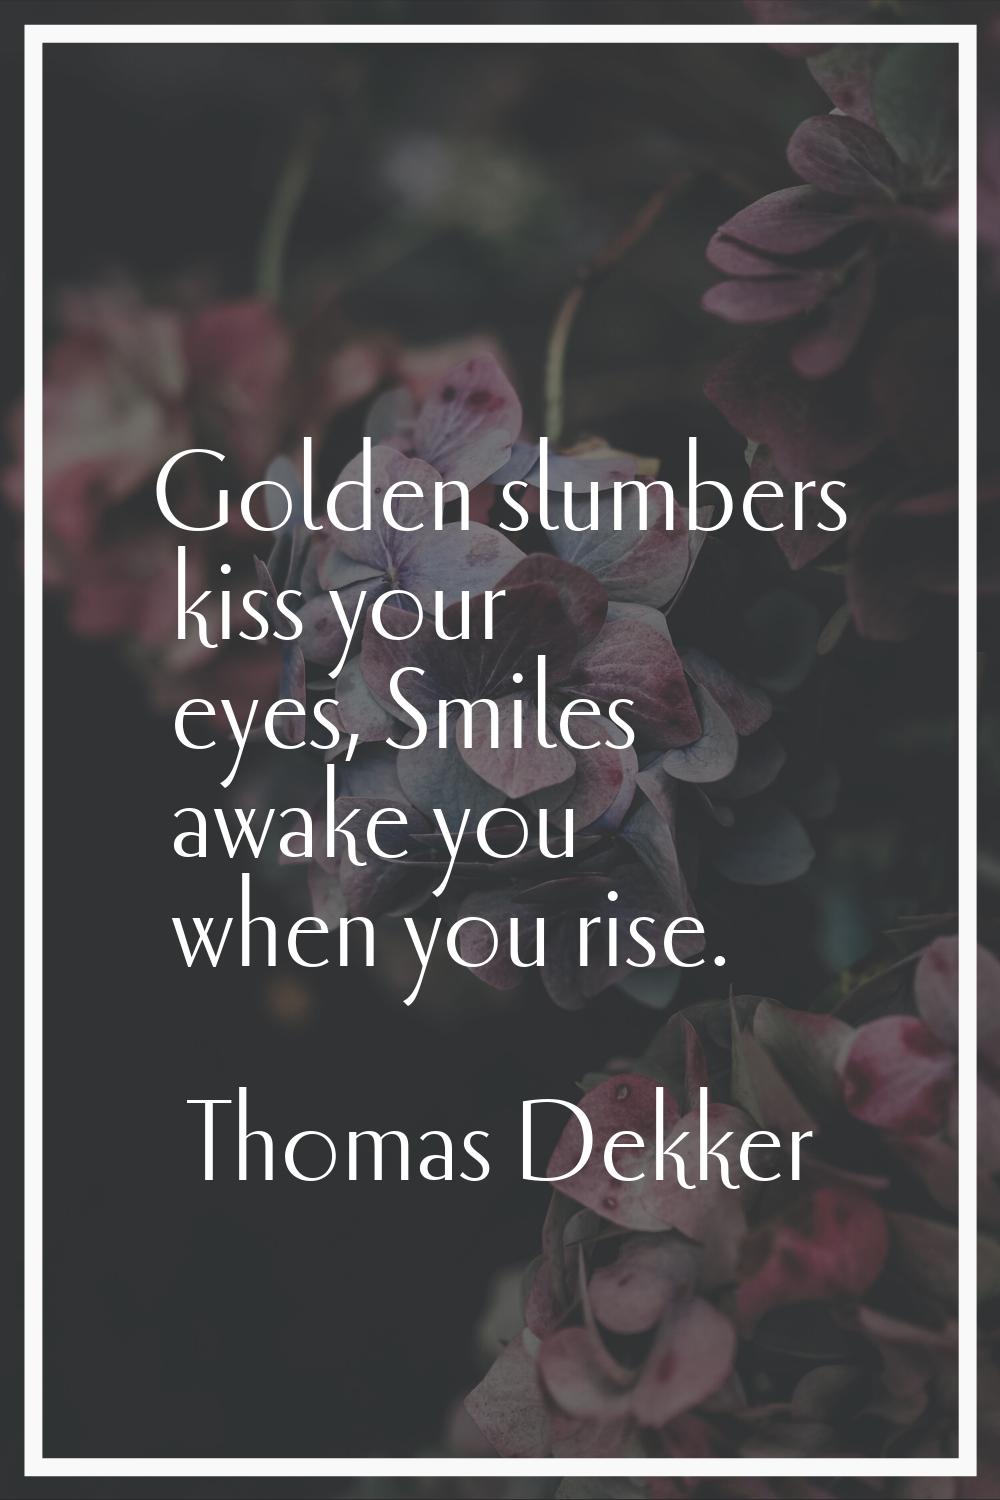 Golden slumbers kiss your eyes, Smiles awake you when you rise.